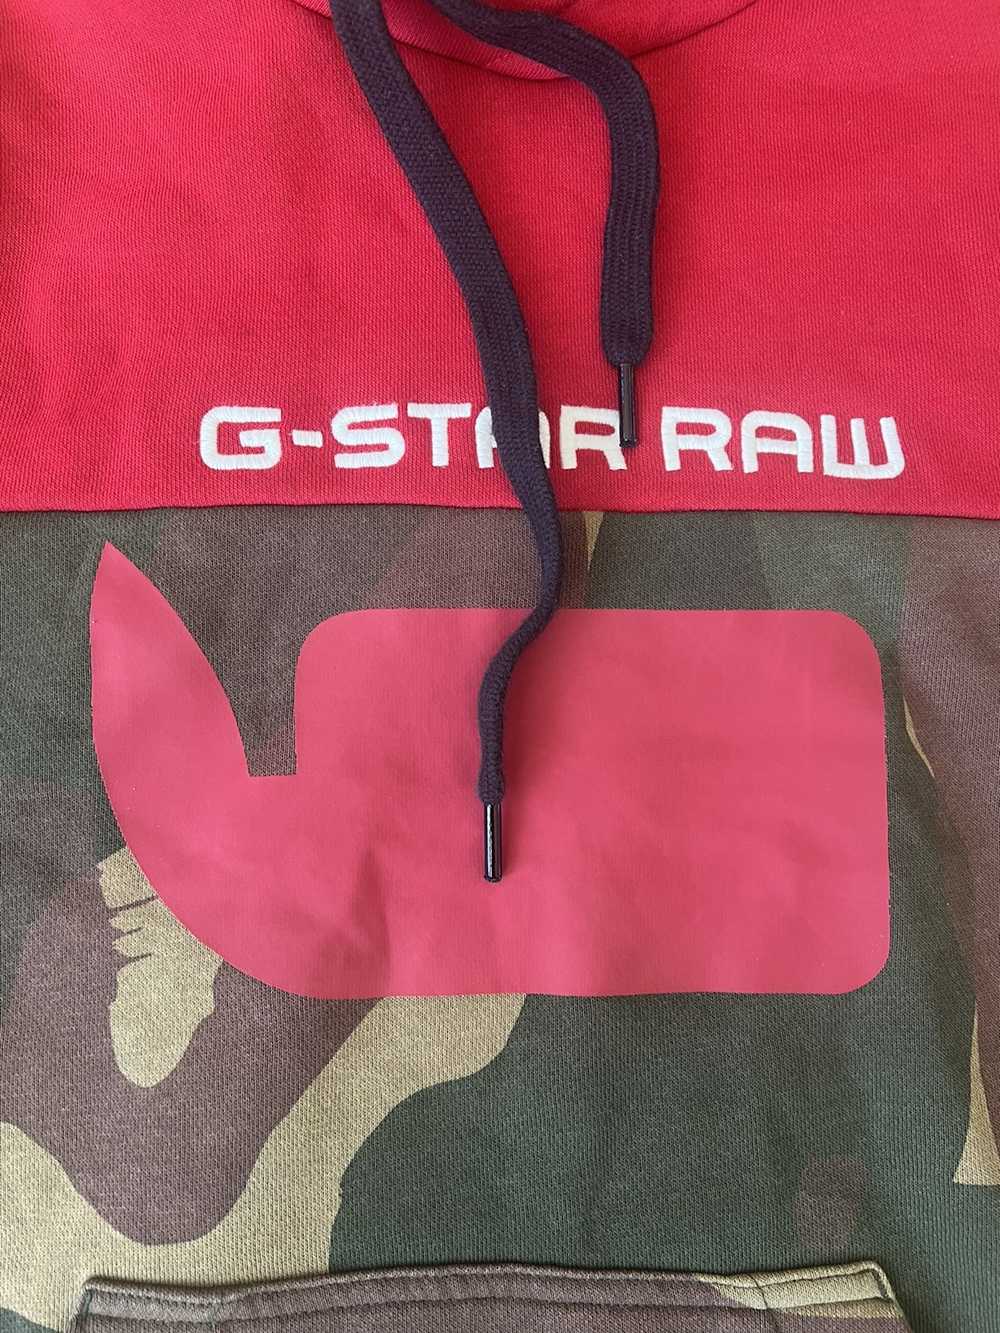 G Star Raw × Gstar G Star Raw Hoodie - image 2